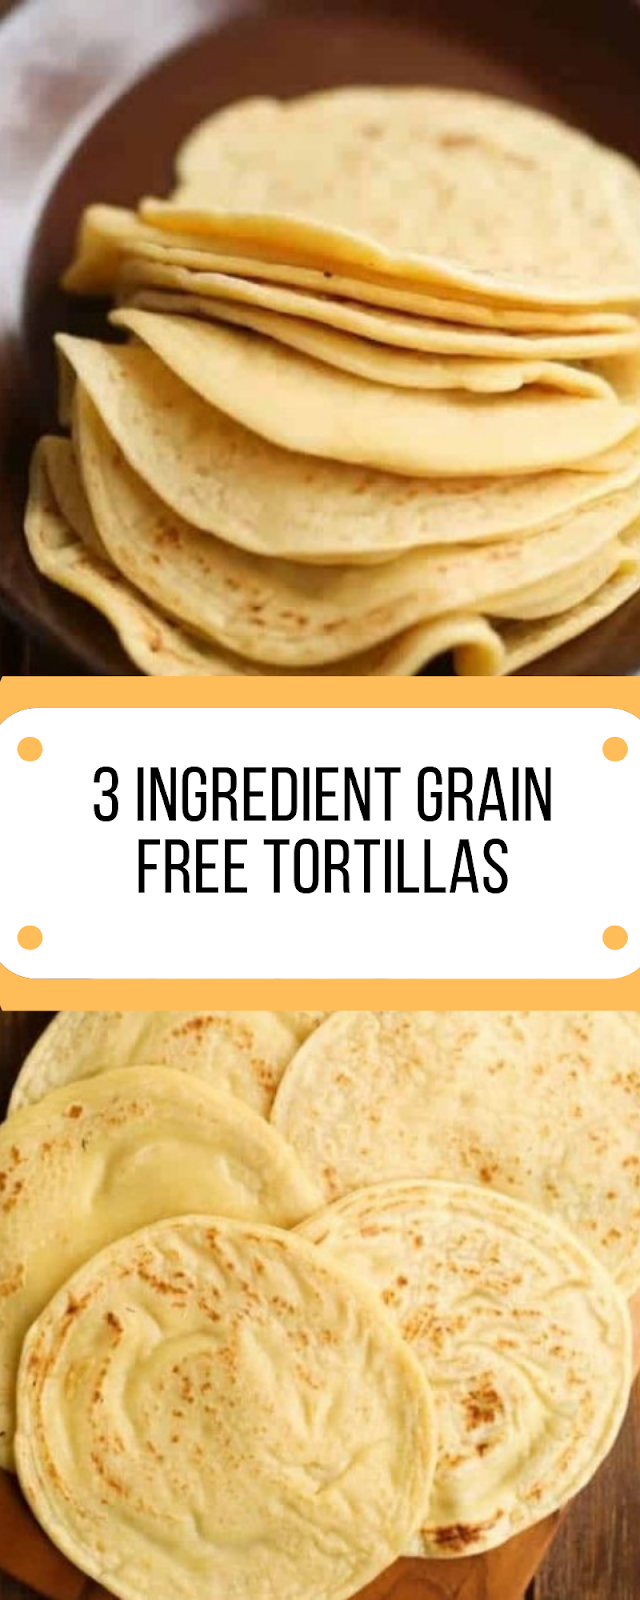 3 Ingredient Grain Free Tortillas